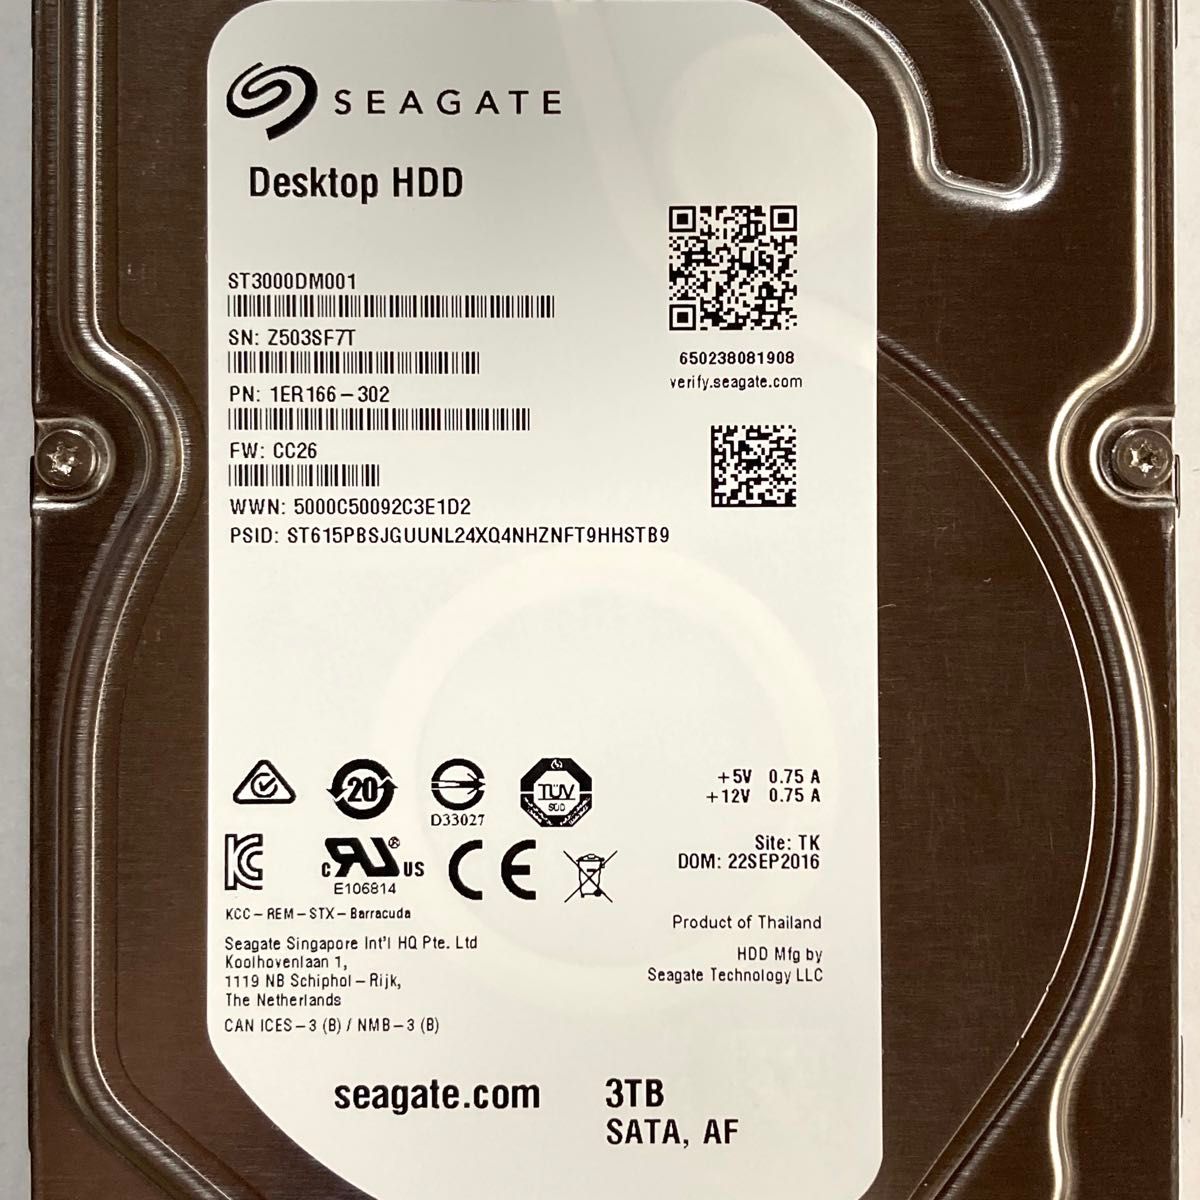 ★ 3TB SEAGATE 3.5インチ SATA 内蔵型HDD ST3000DM001 内蔵型ハードディスク ★